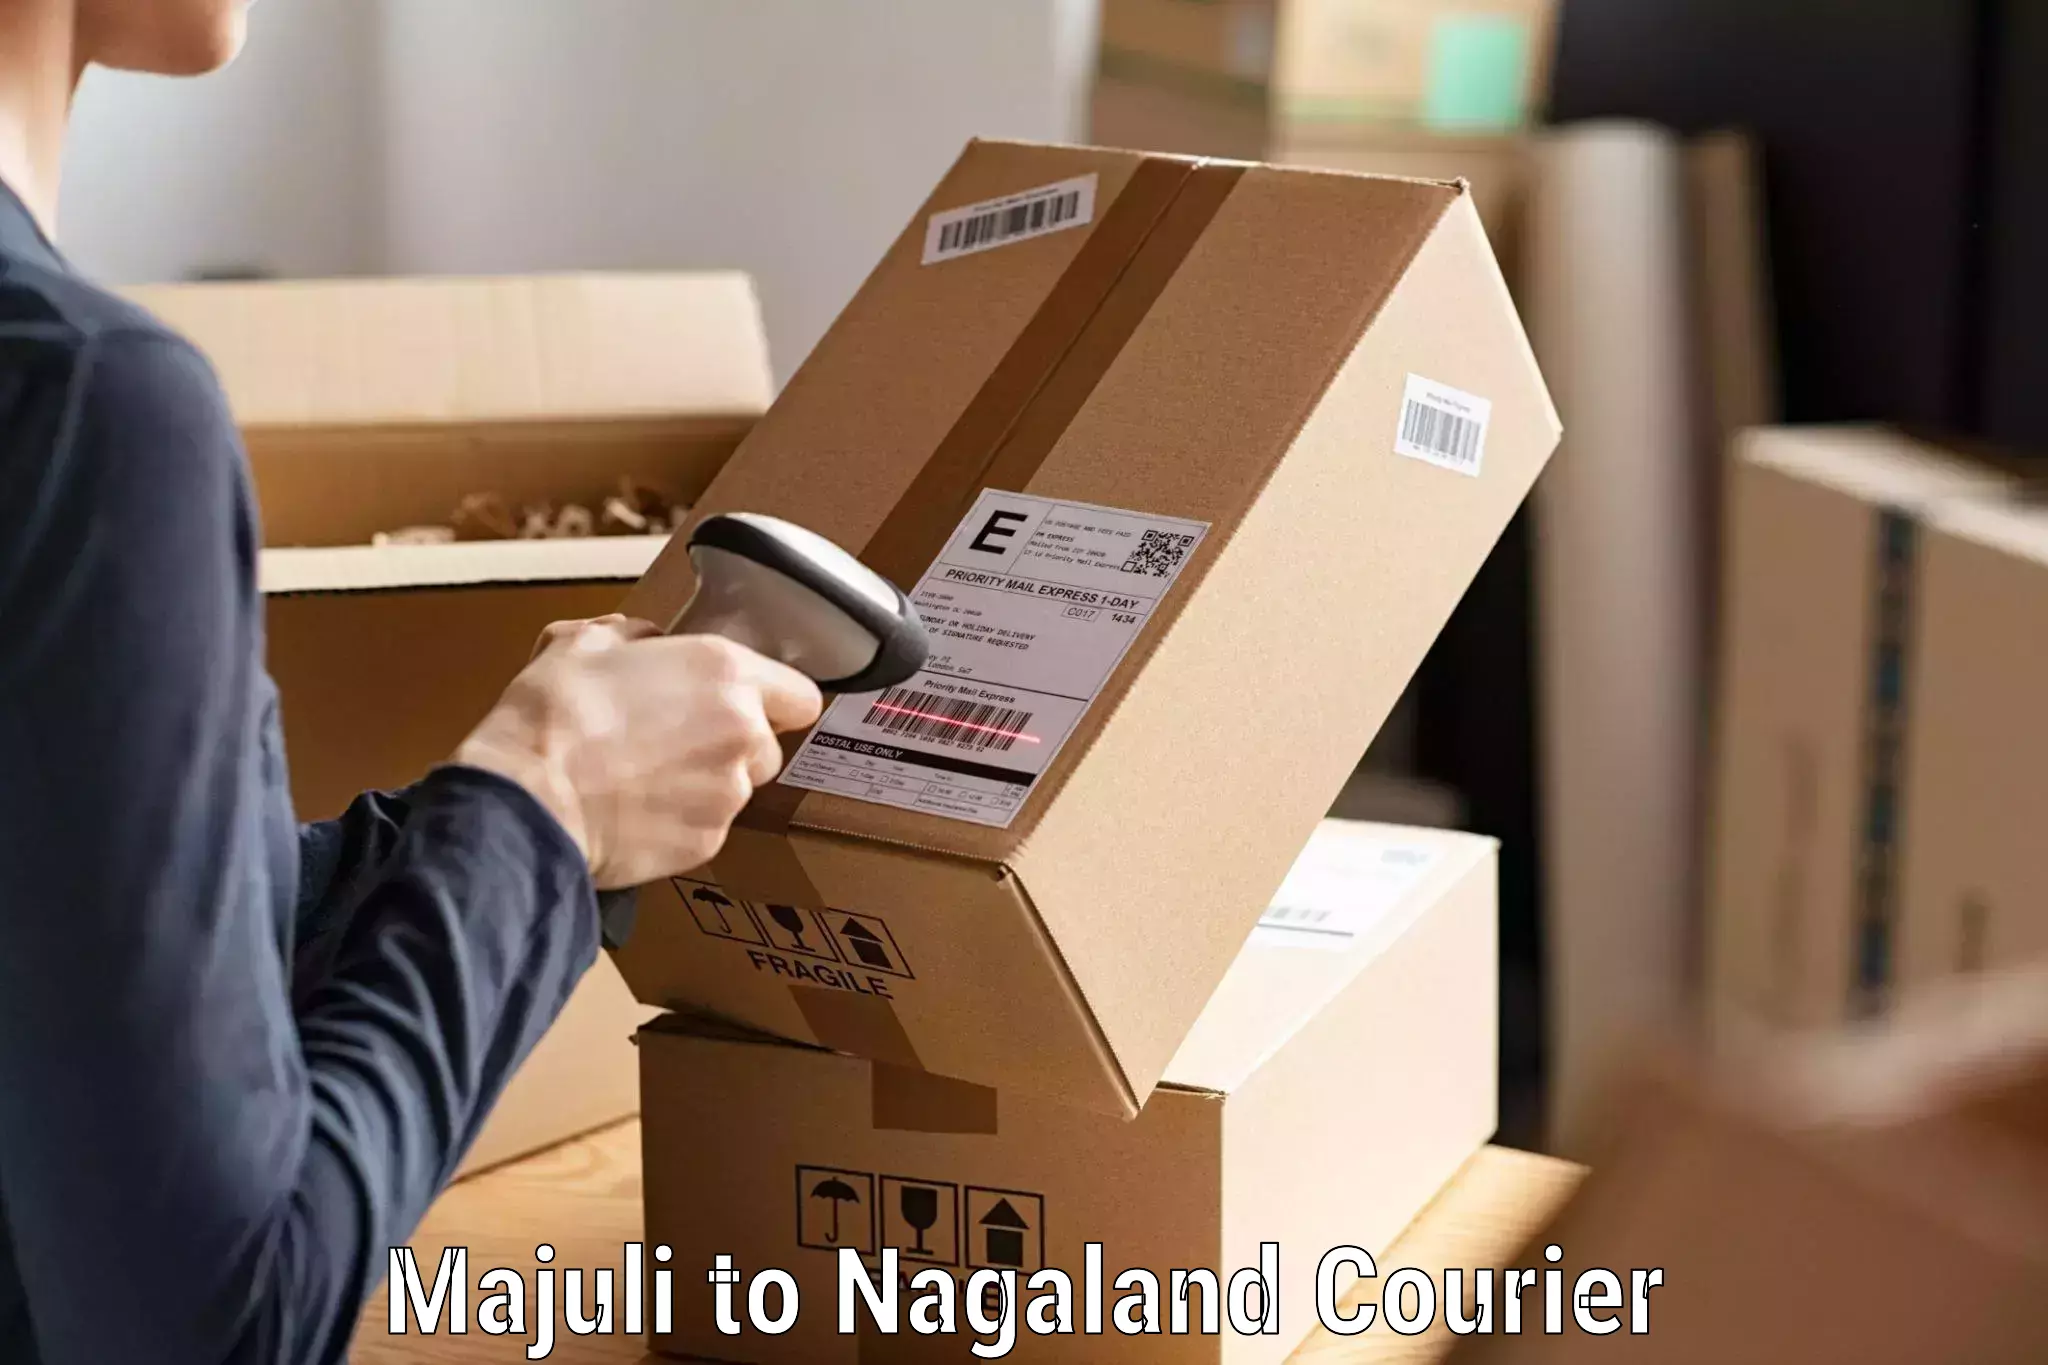 Professional parcel services Majuli to Dimapur